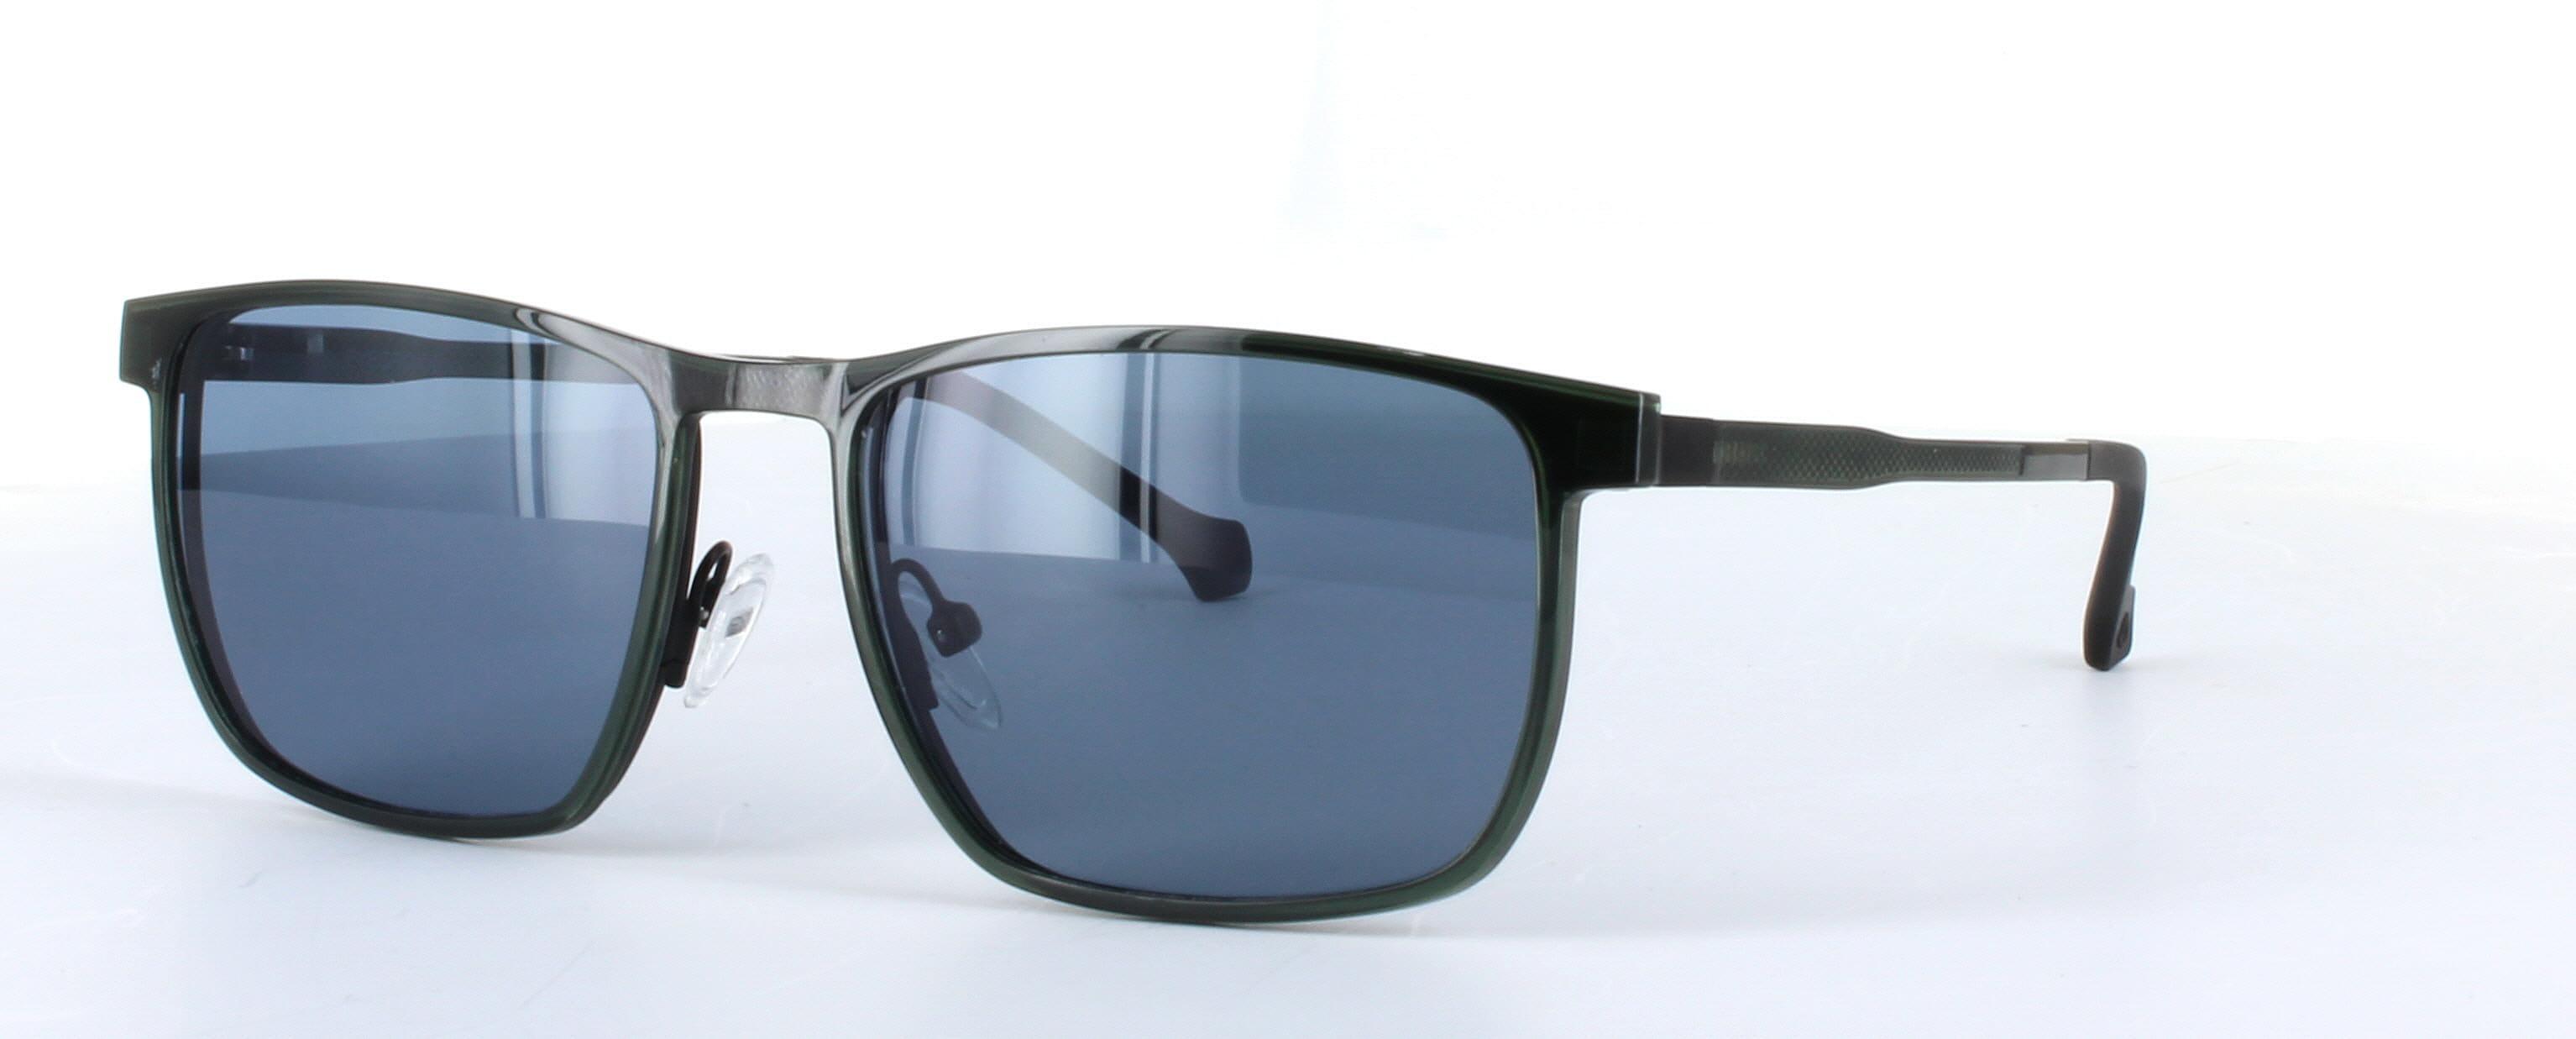 Eyecroxx 601 Grey Full Rim Metal Glasses - Image View 5